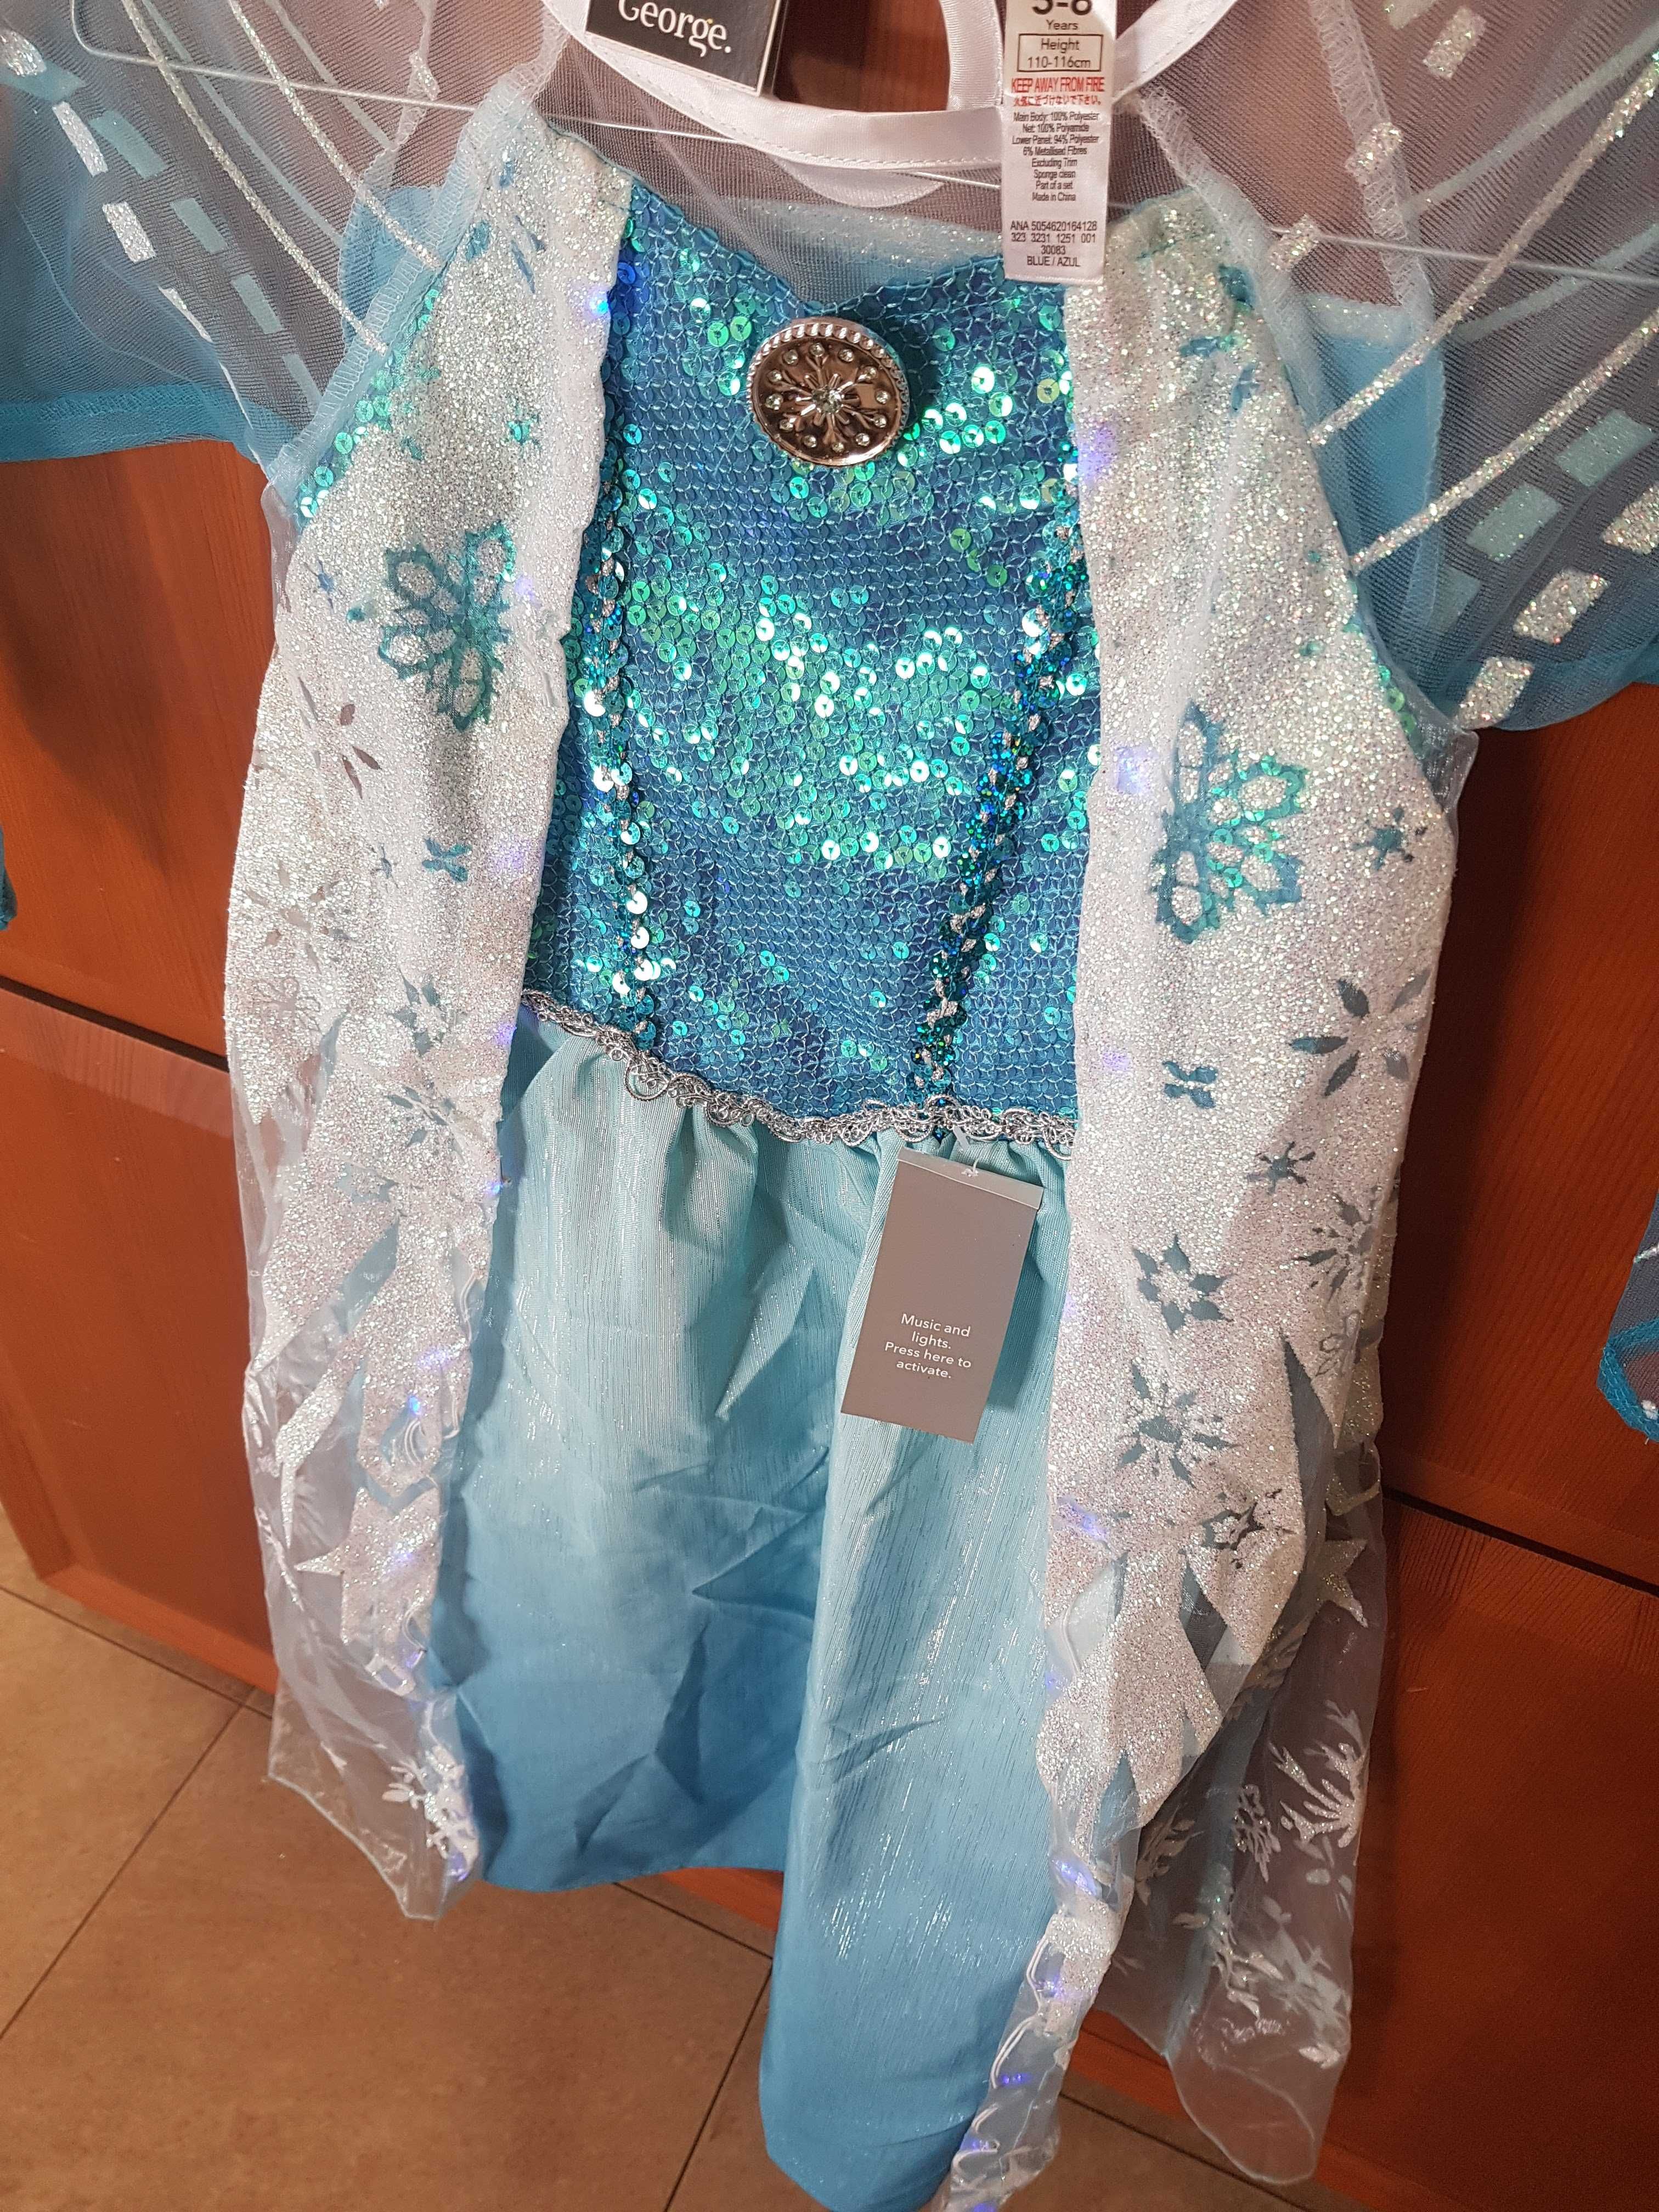 Sukienka przebranie Elsa - Kraina lodu 9-10 lat George